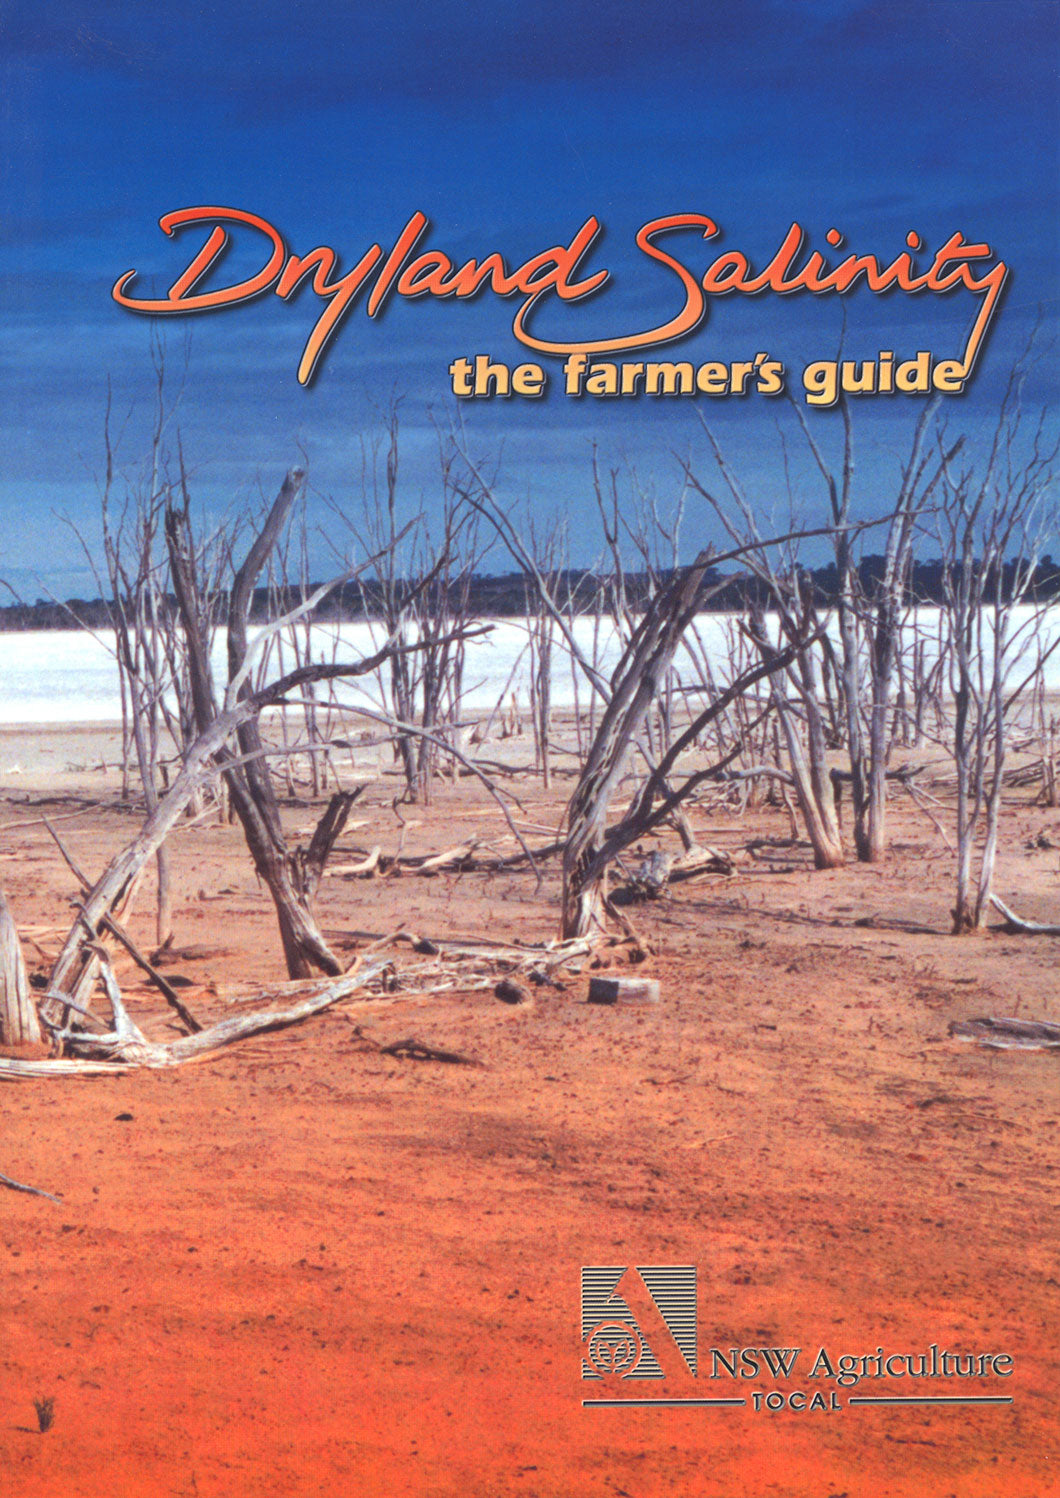 Dryland salinity bookcover